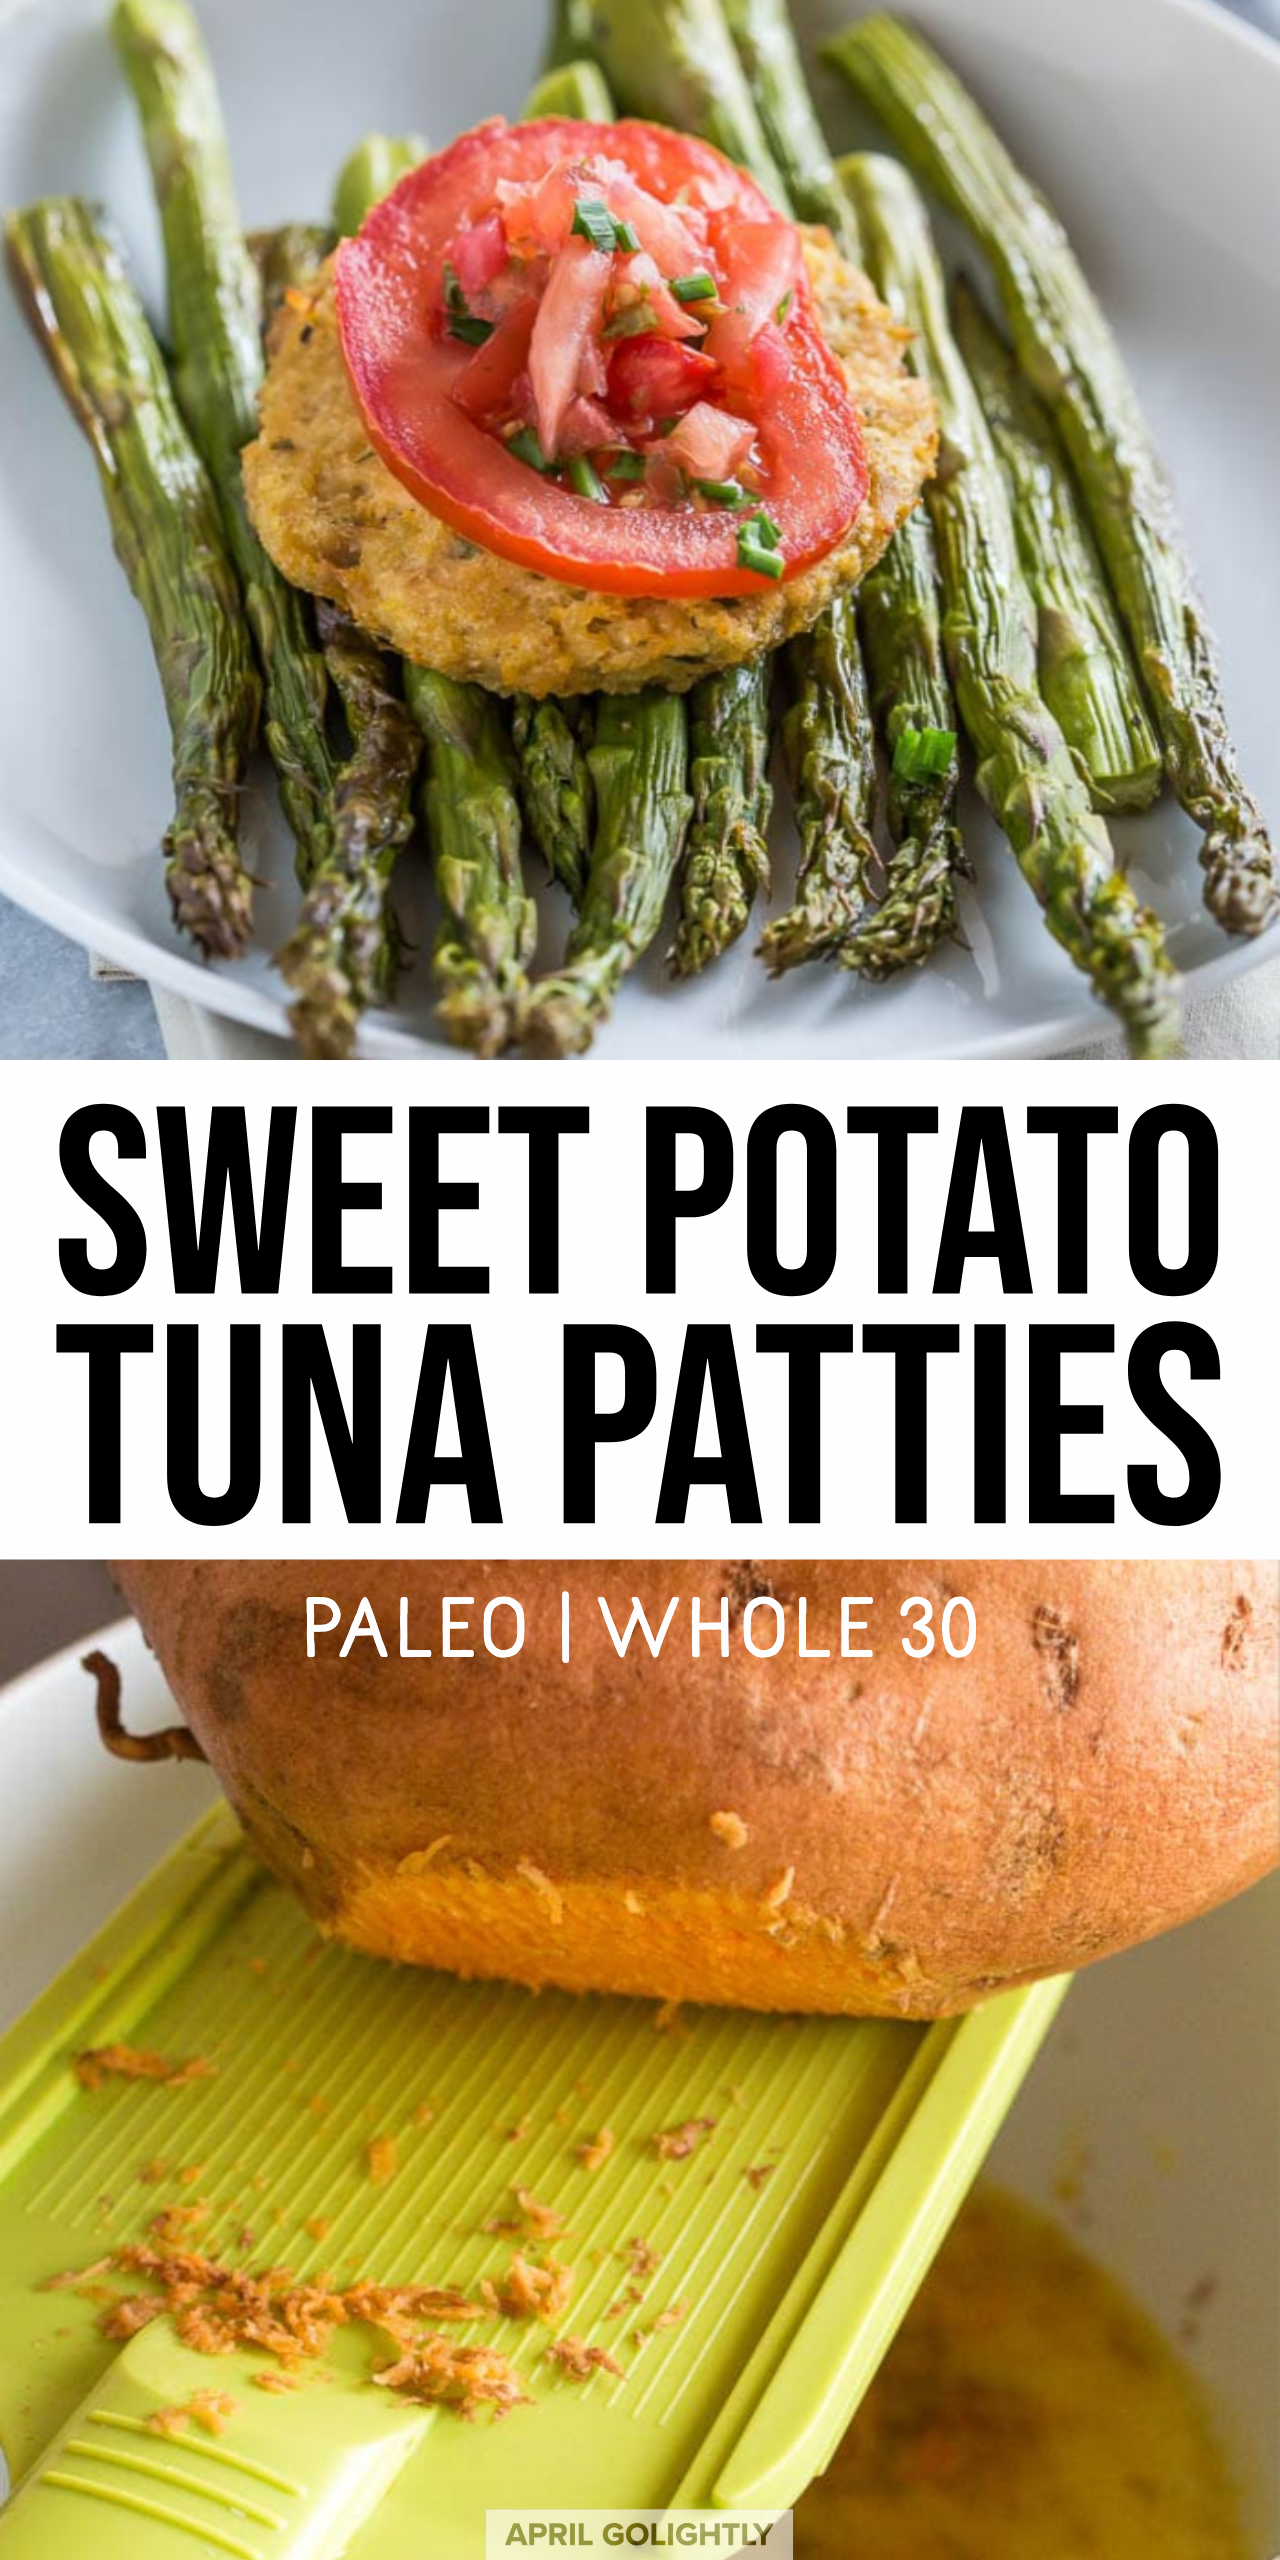 Tuna Patties with Shredded Sweet Potato - April Golightly